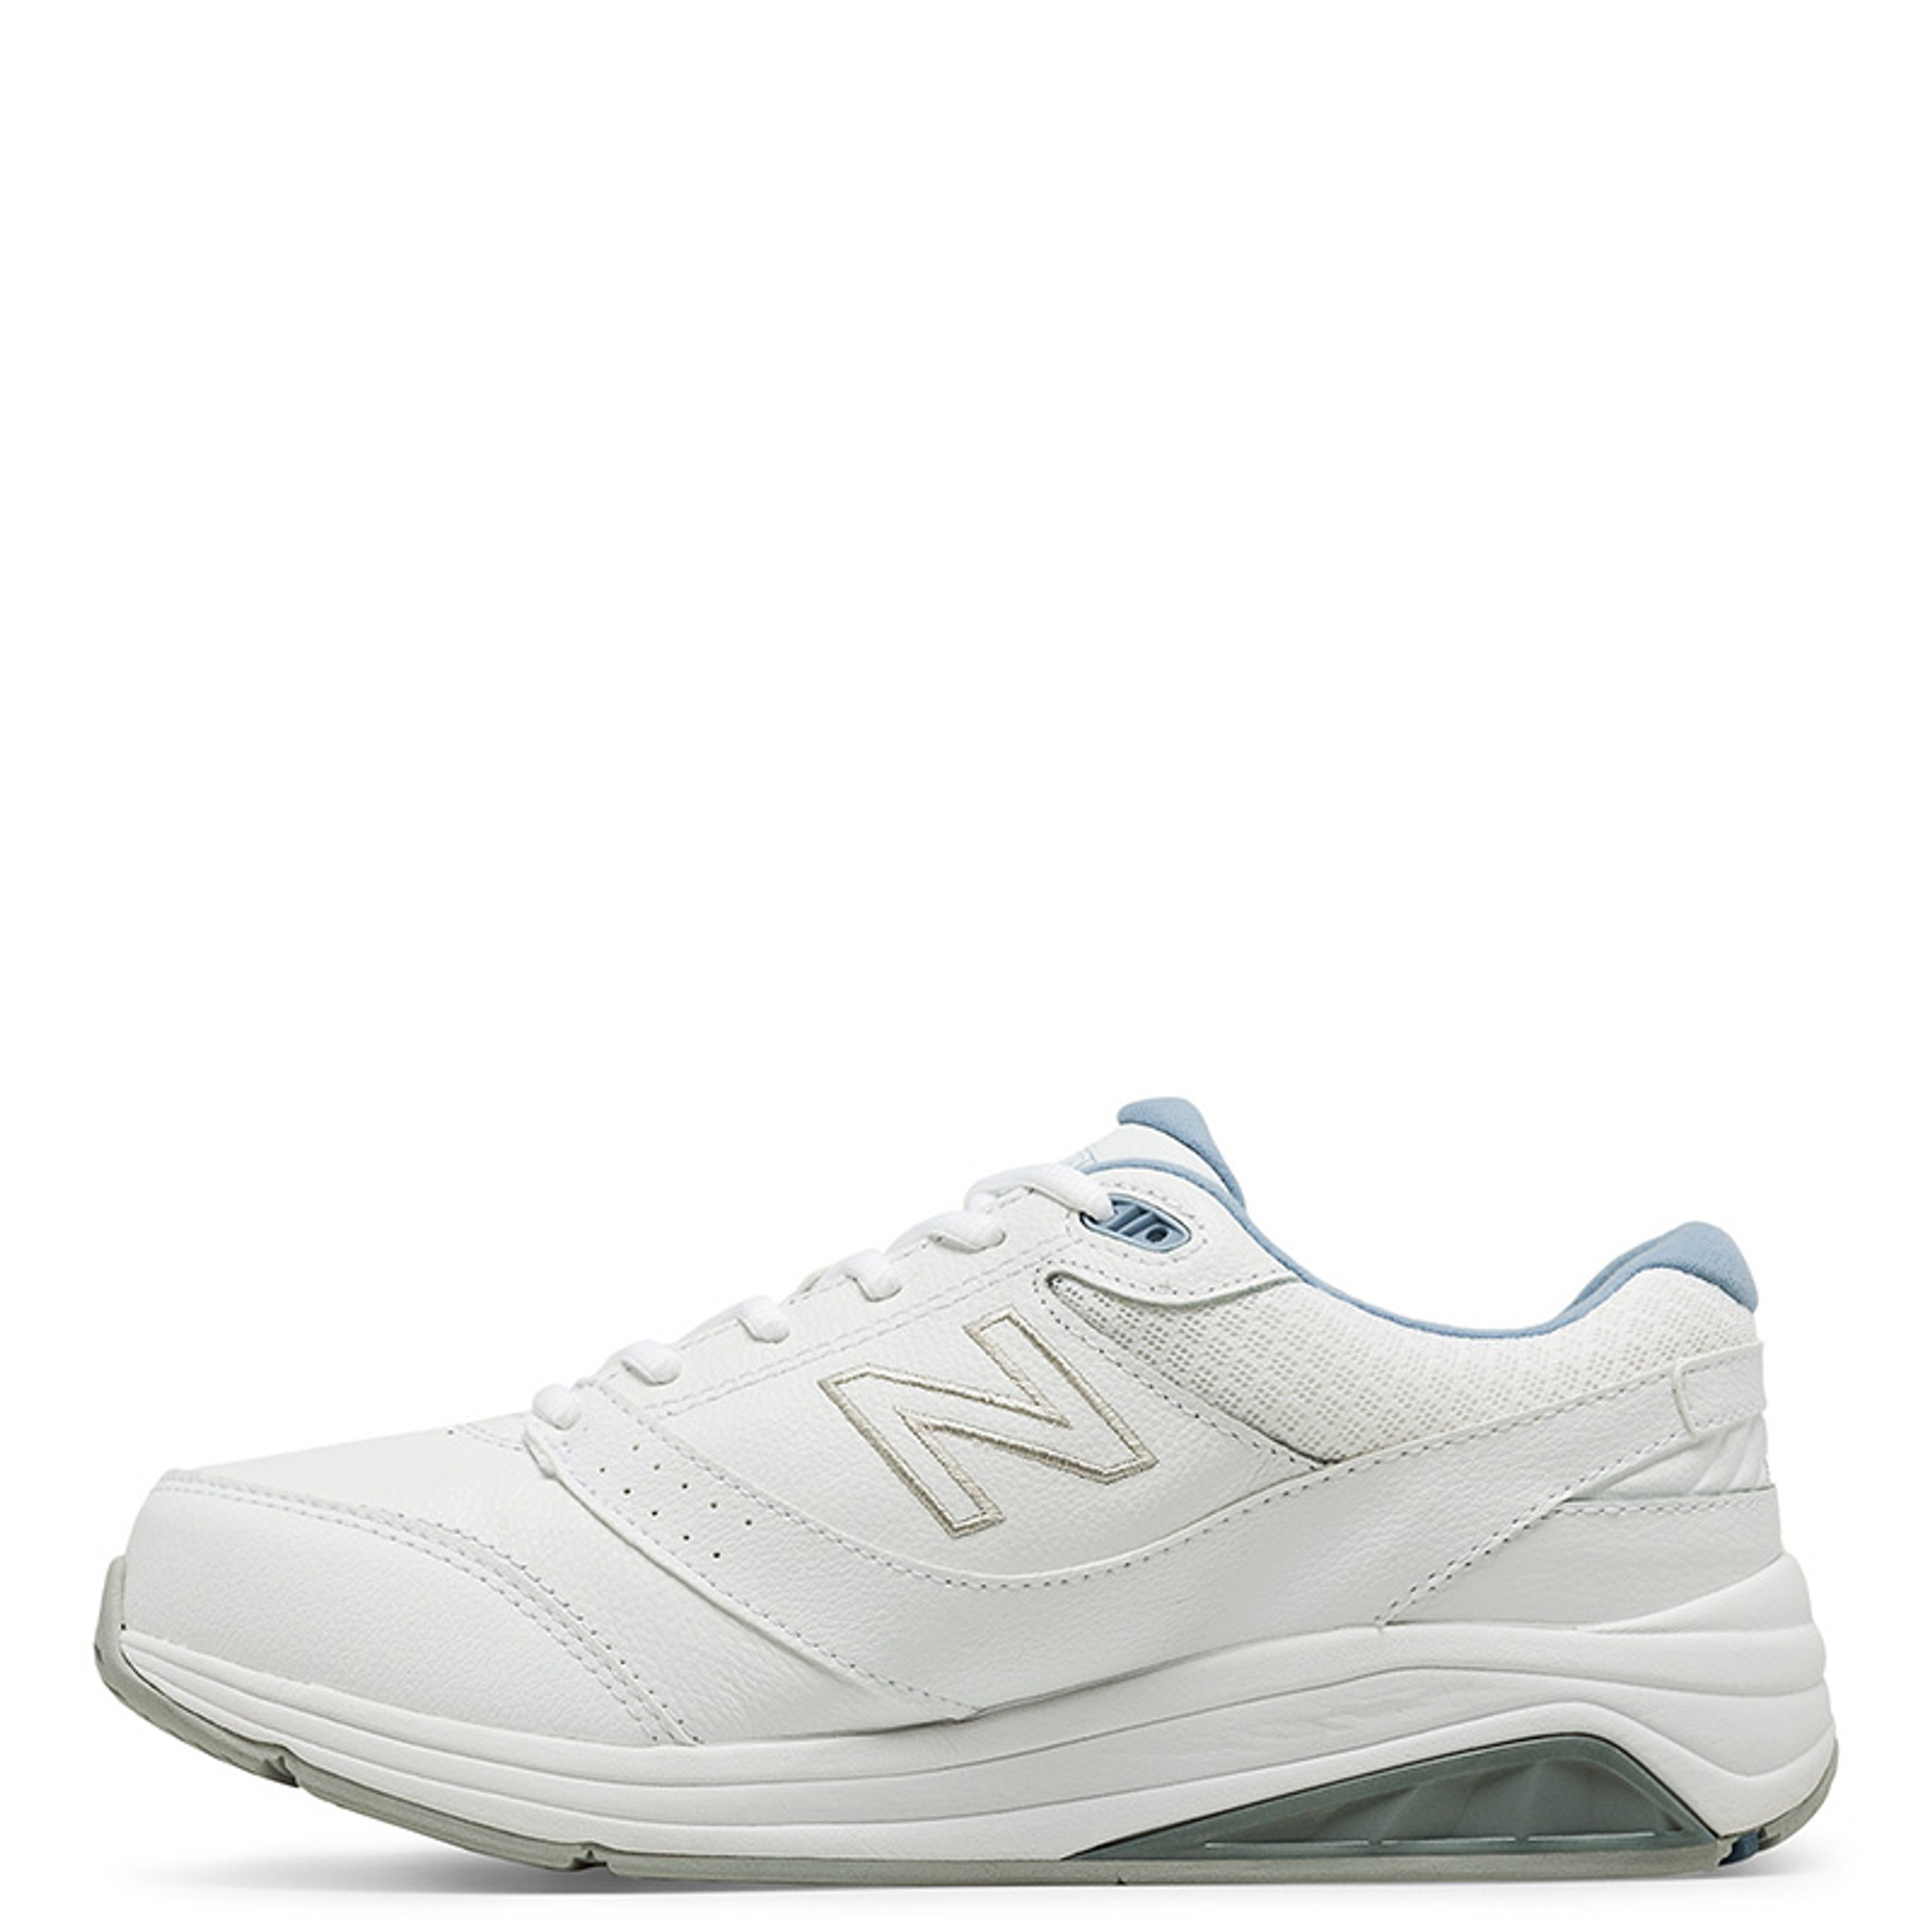 New Balance 928v3 Women's WHITE LEATHER Walking Sneakers - Family ...